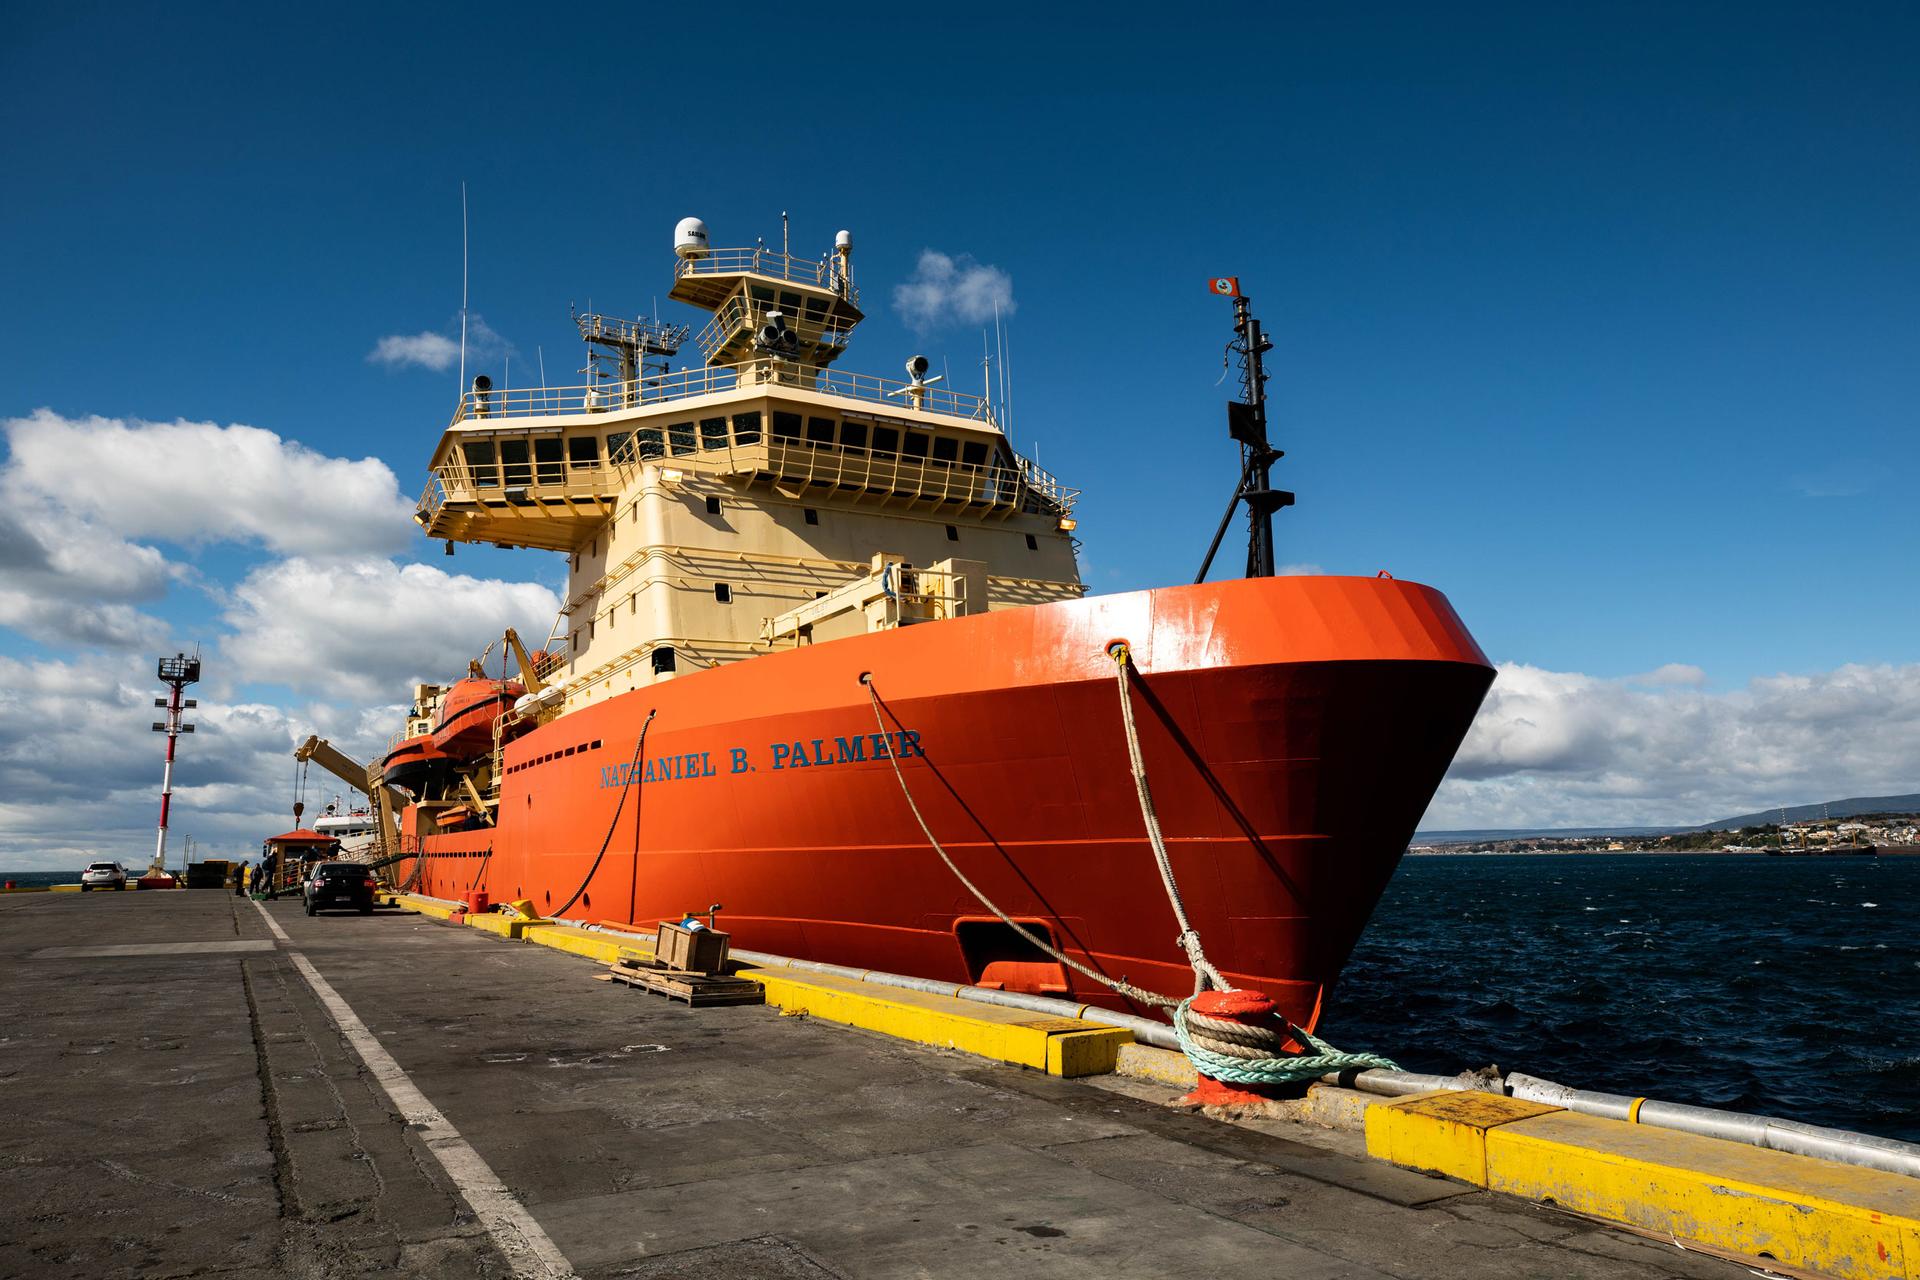 The bright orange Nathaniel B Palmer ship is docked